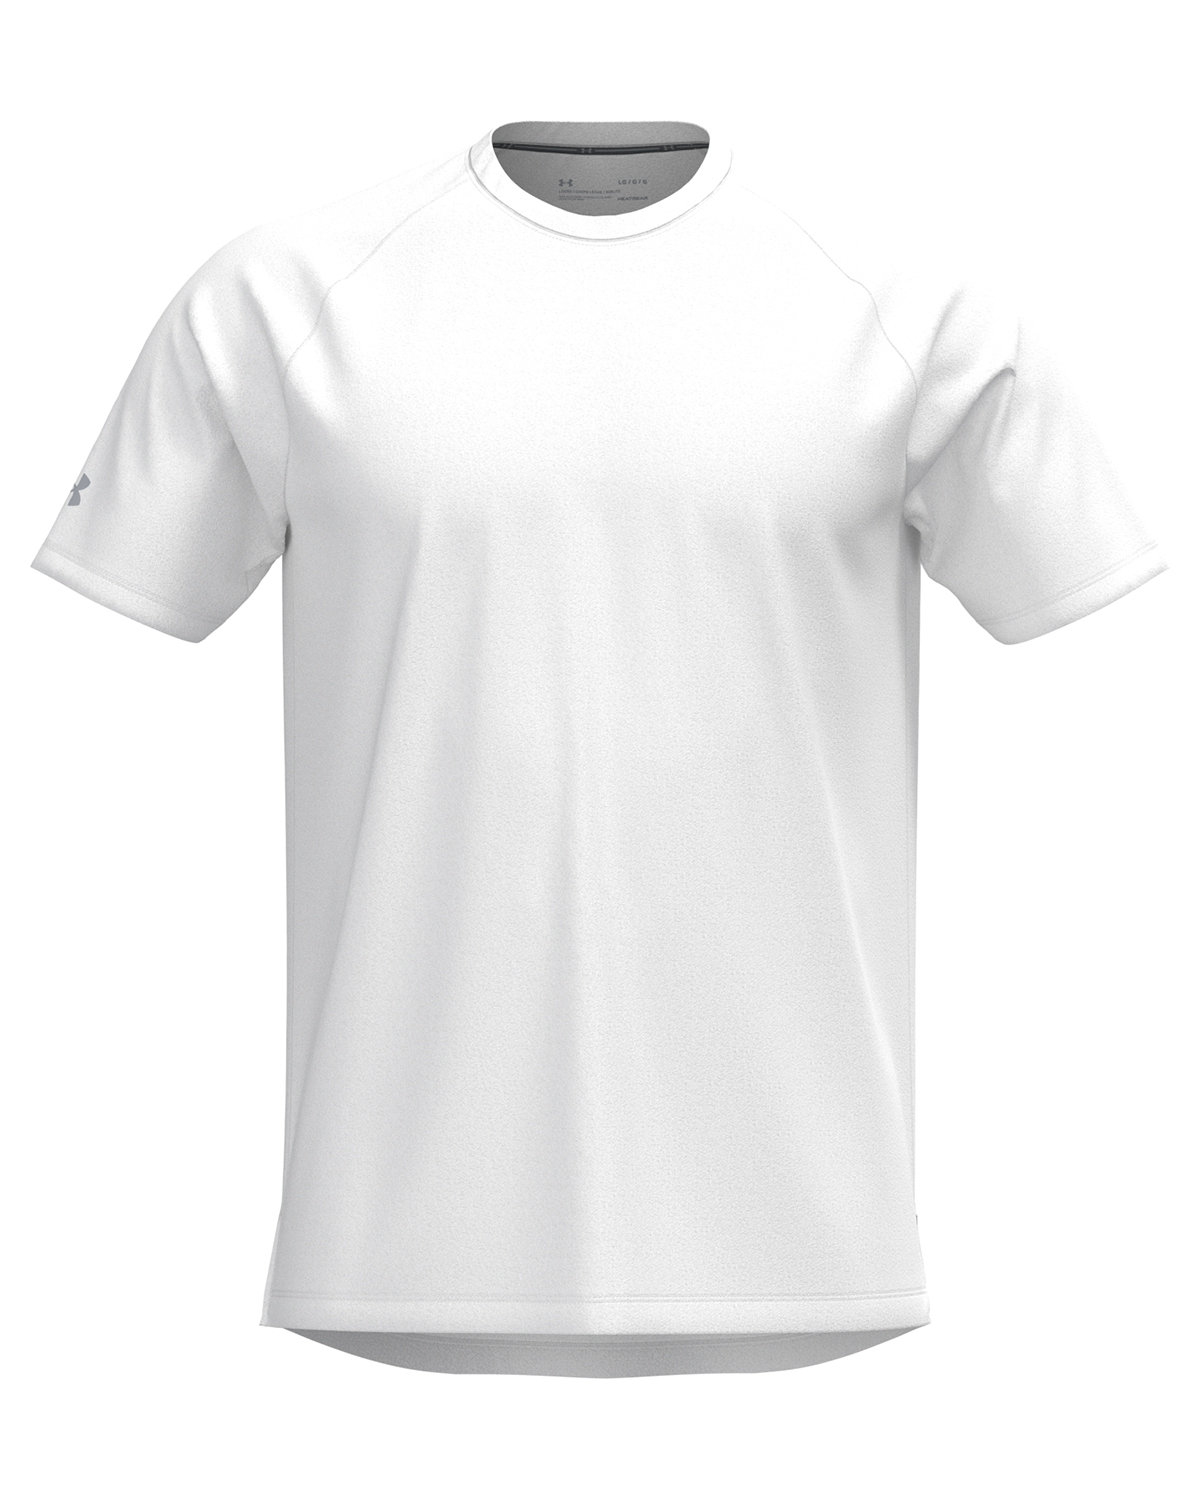 Under Armour 1383284 - Ladies' Athletic 2.0 Raglan T-Shirt